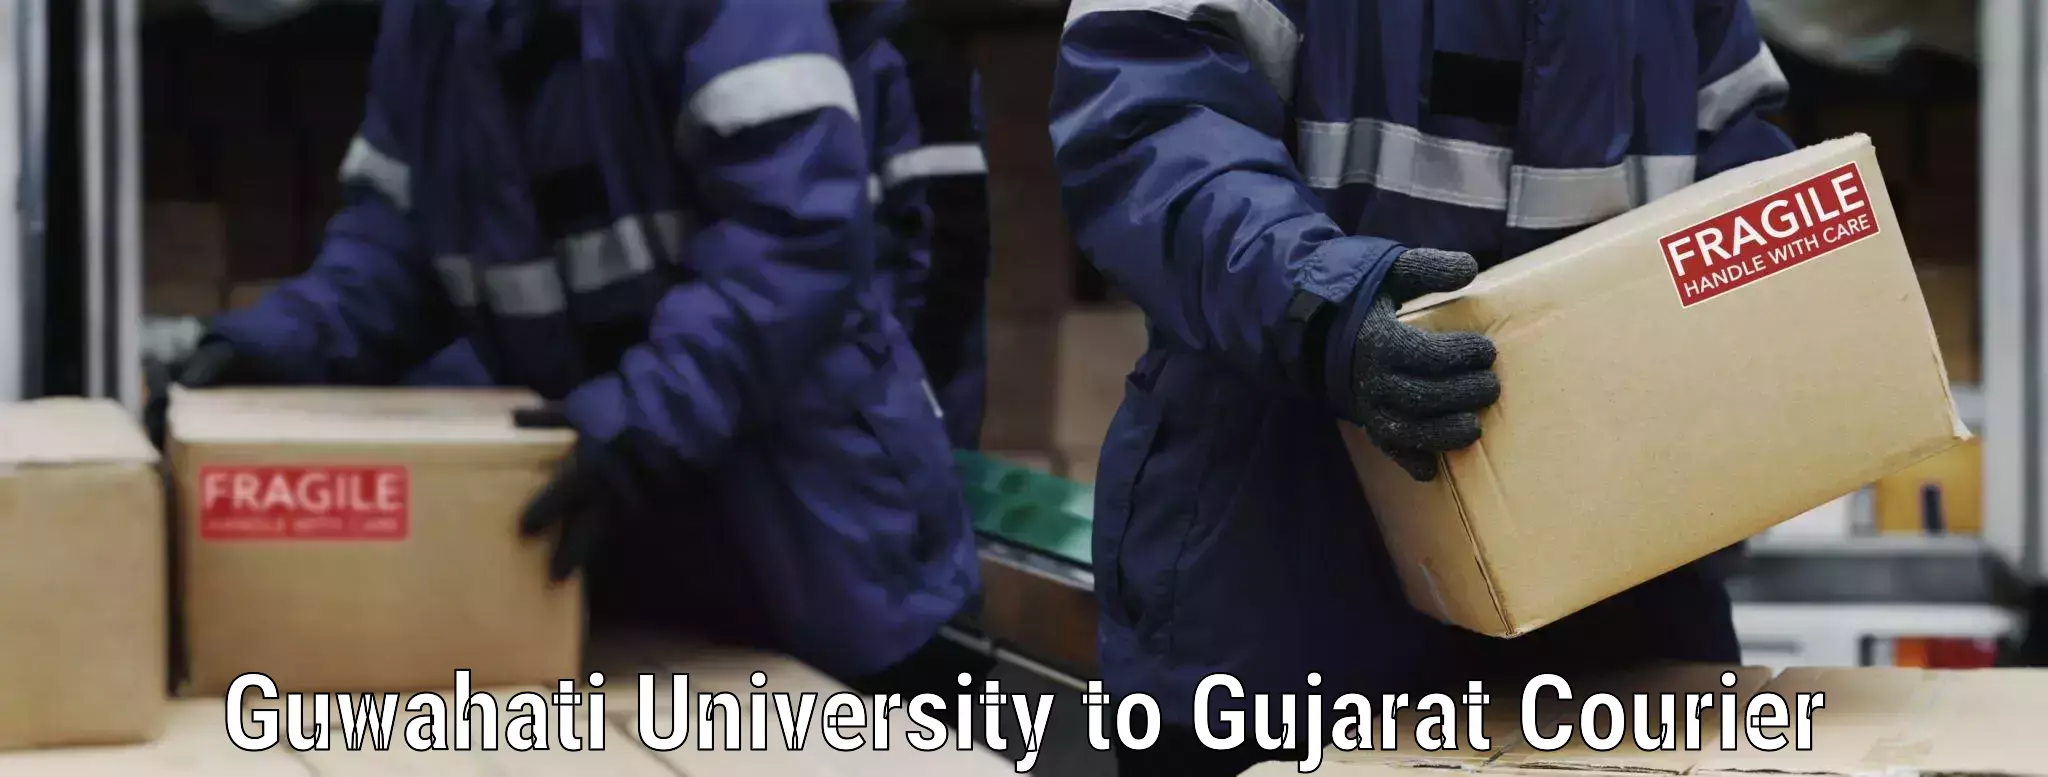 Reliable movers Guwahati University to Narmada Gujarat